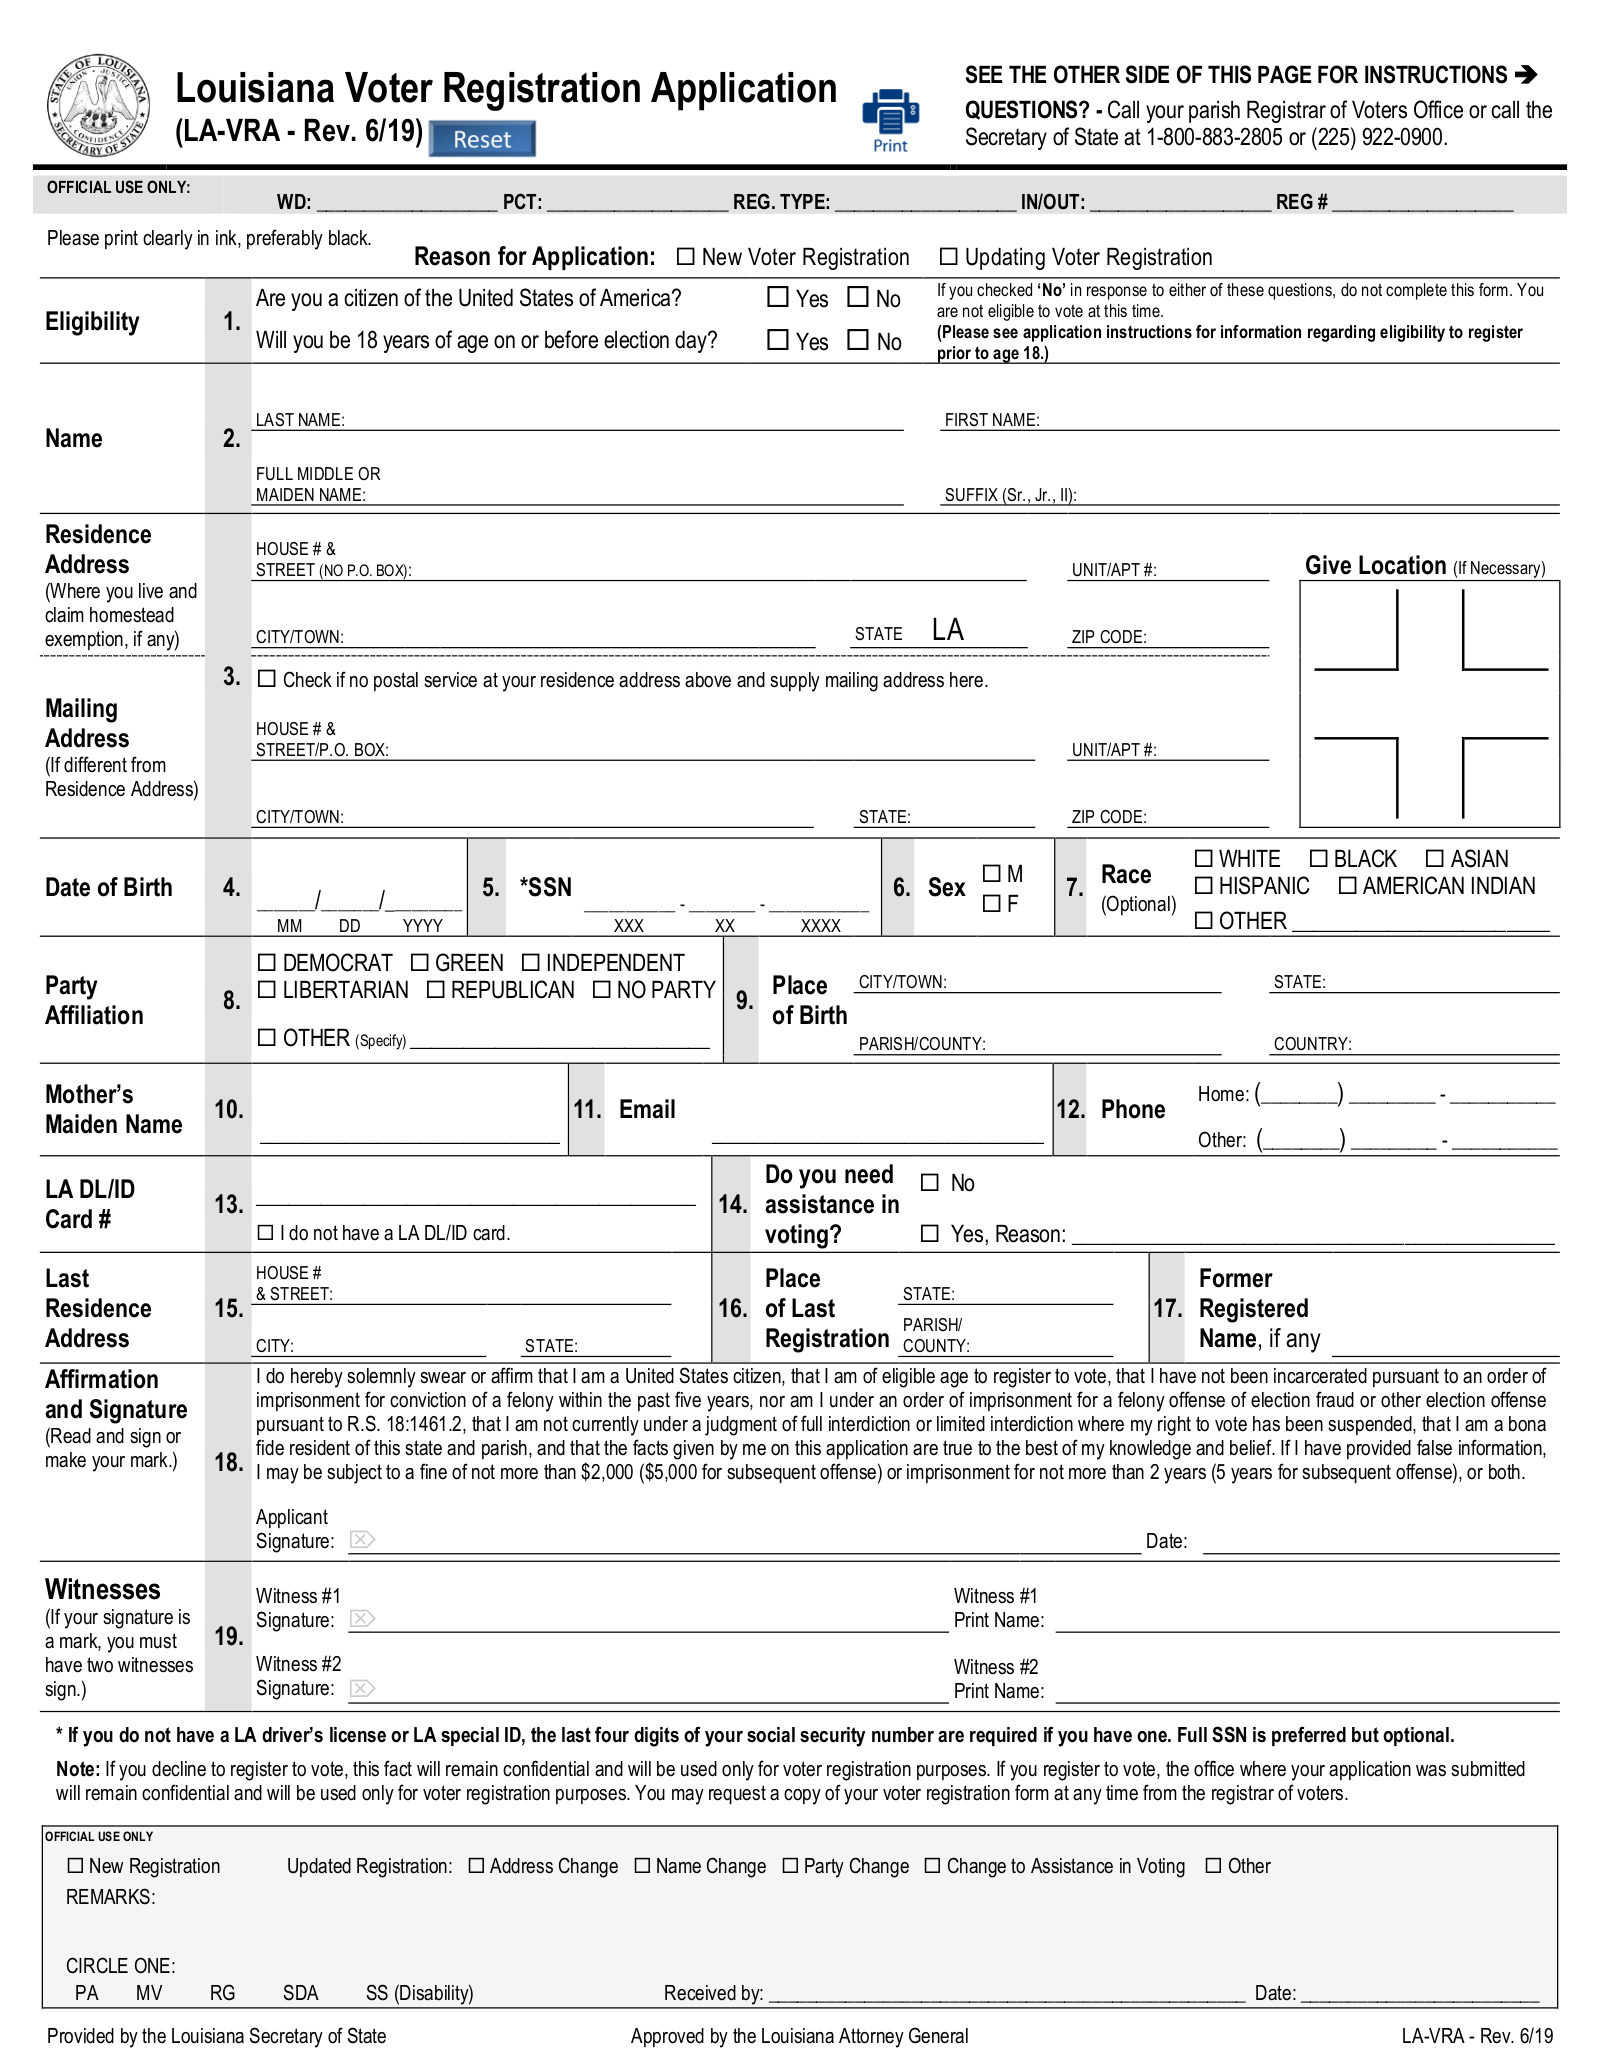 Louisiana Voter Registration Form – Register to Vote in LA